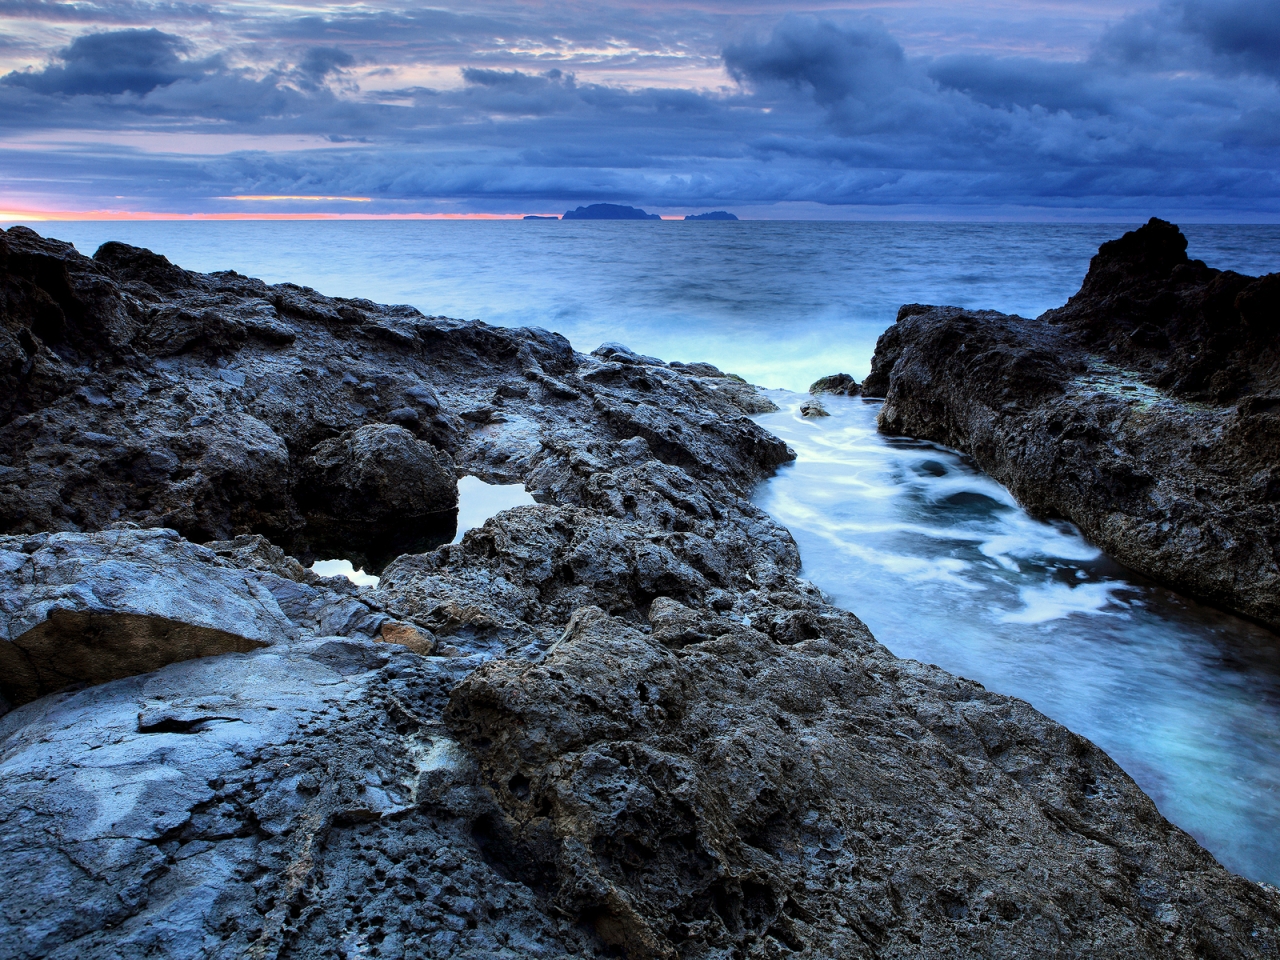 Sea Stones for 1280 x 960 resolution